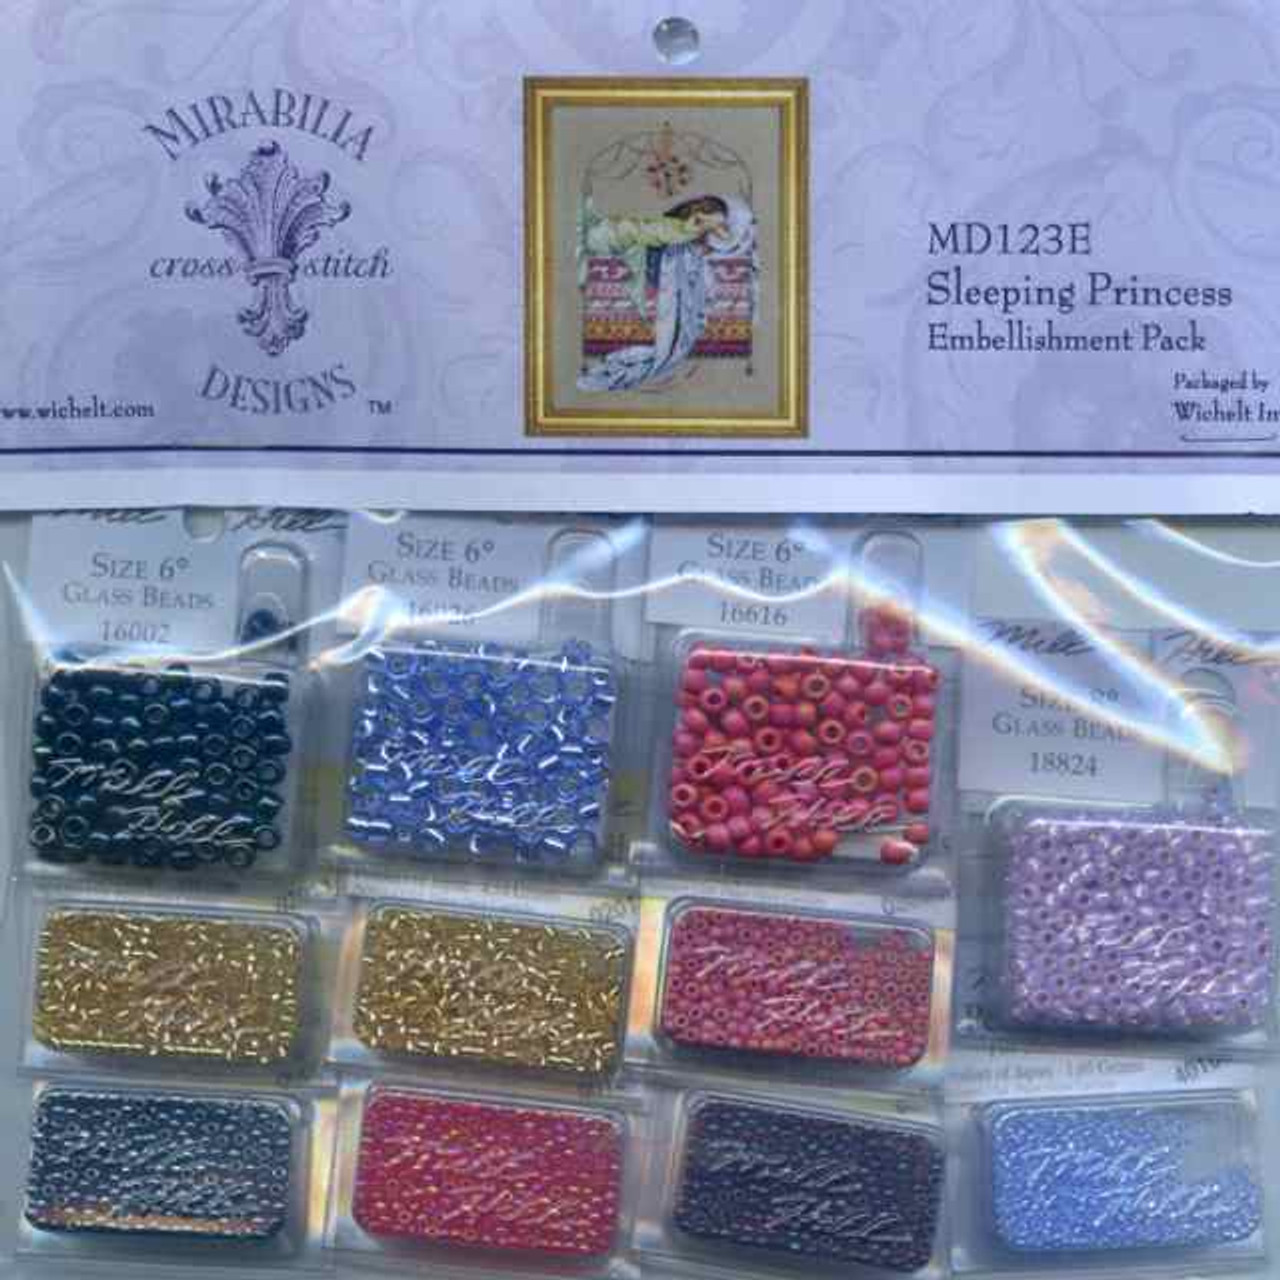 Mill Hill Bead Embellishment Pack for Sleeping Princess Kit Cross Stitch Chart Fabric Beads Braid Nora Corbett Mirabilia Designs MD123